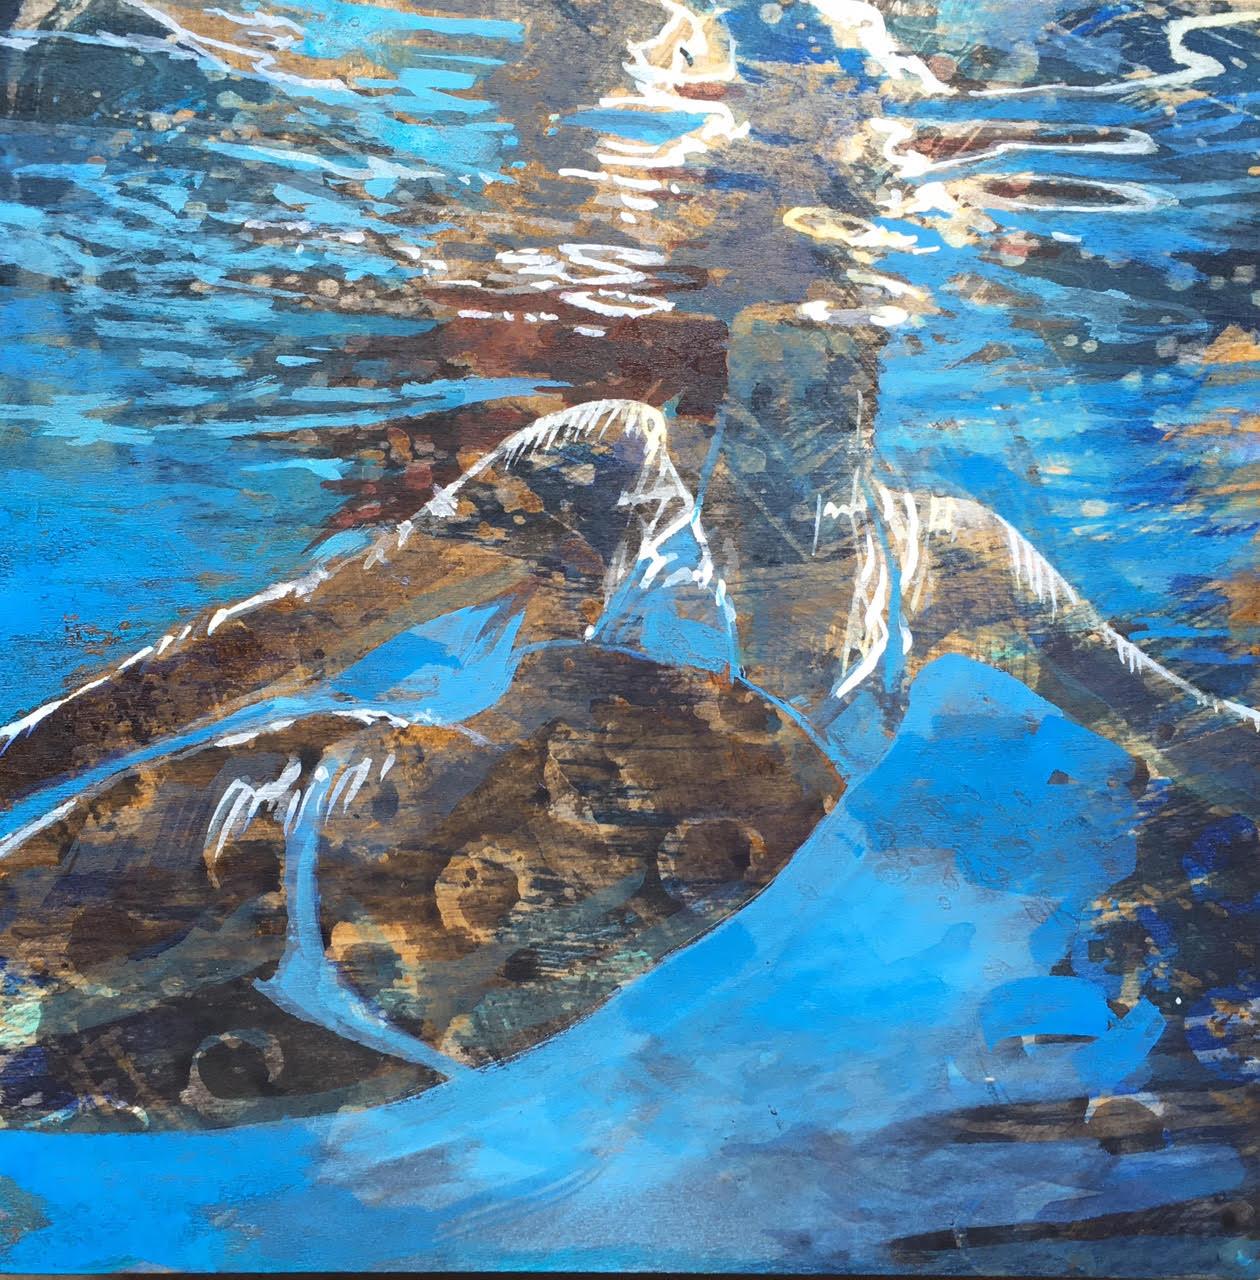 Carol Bennett Figurative Painting - "Summer Sojourn 4" Woman in White Bikini Swimming & Reflection of Water